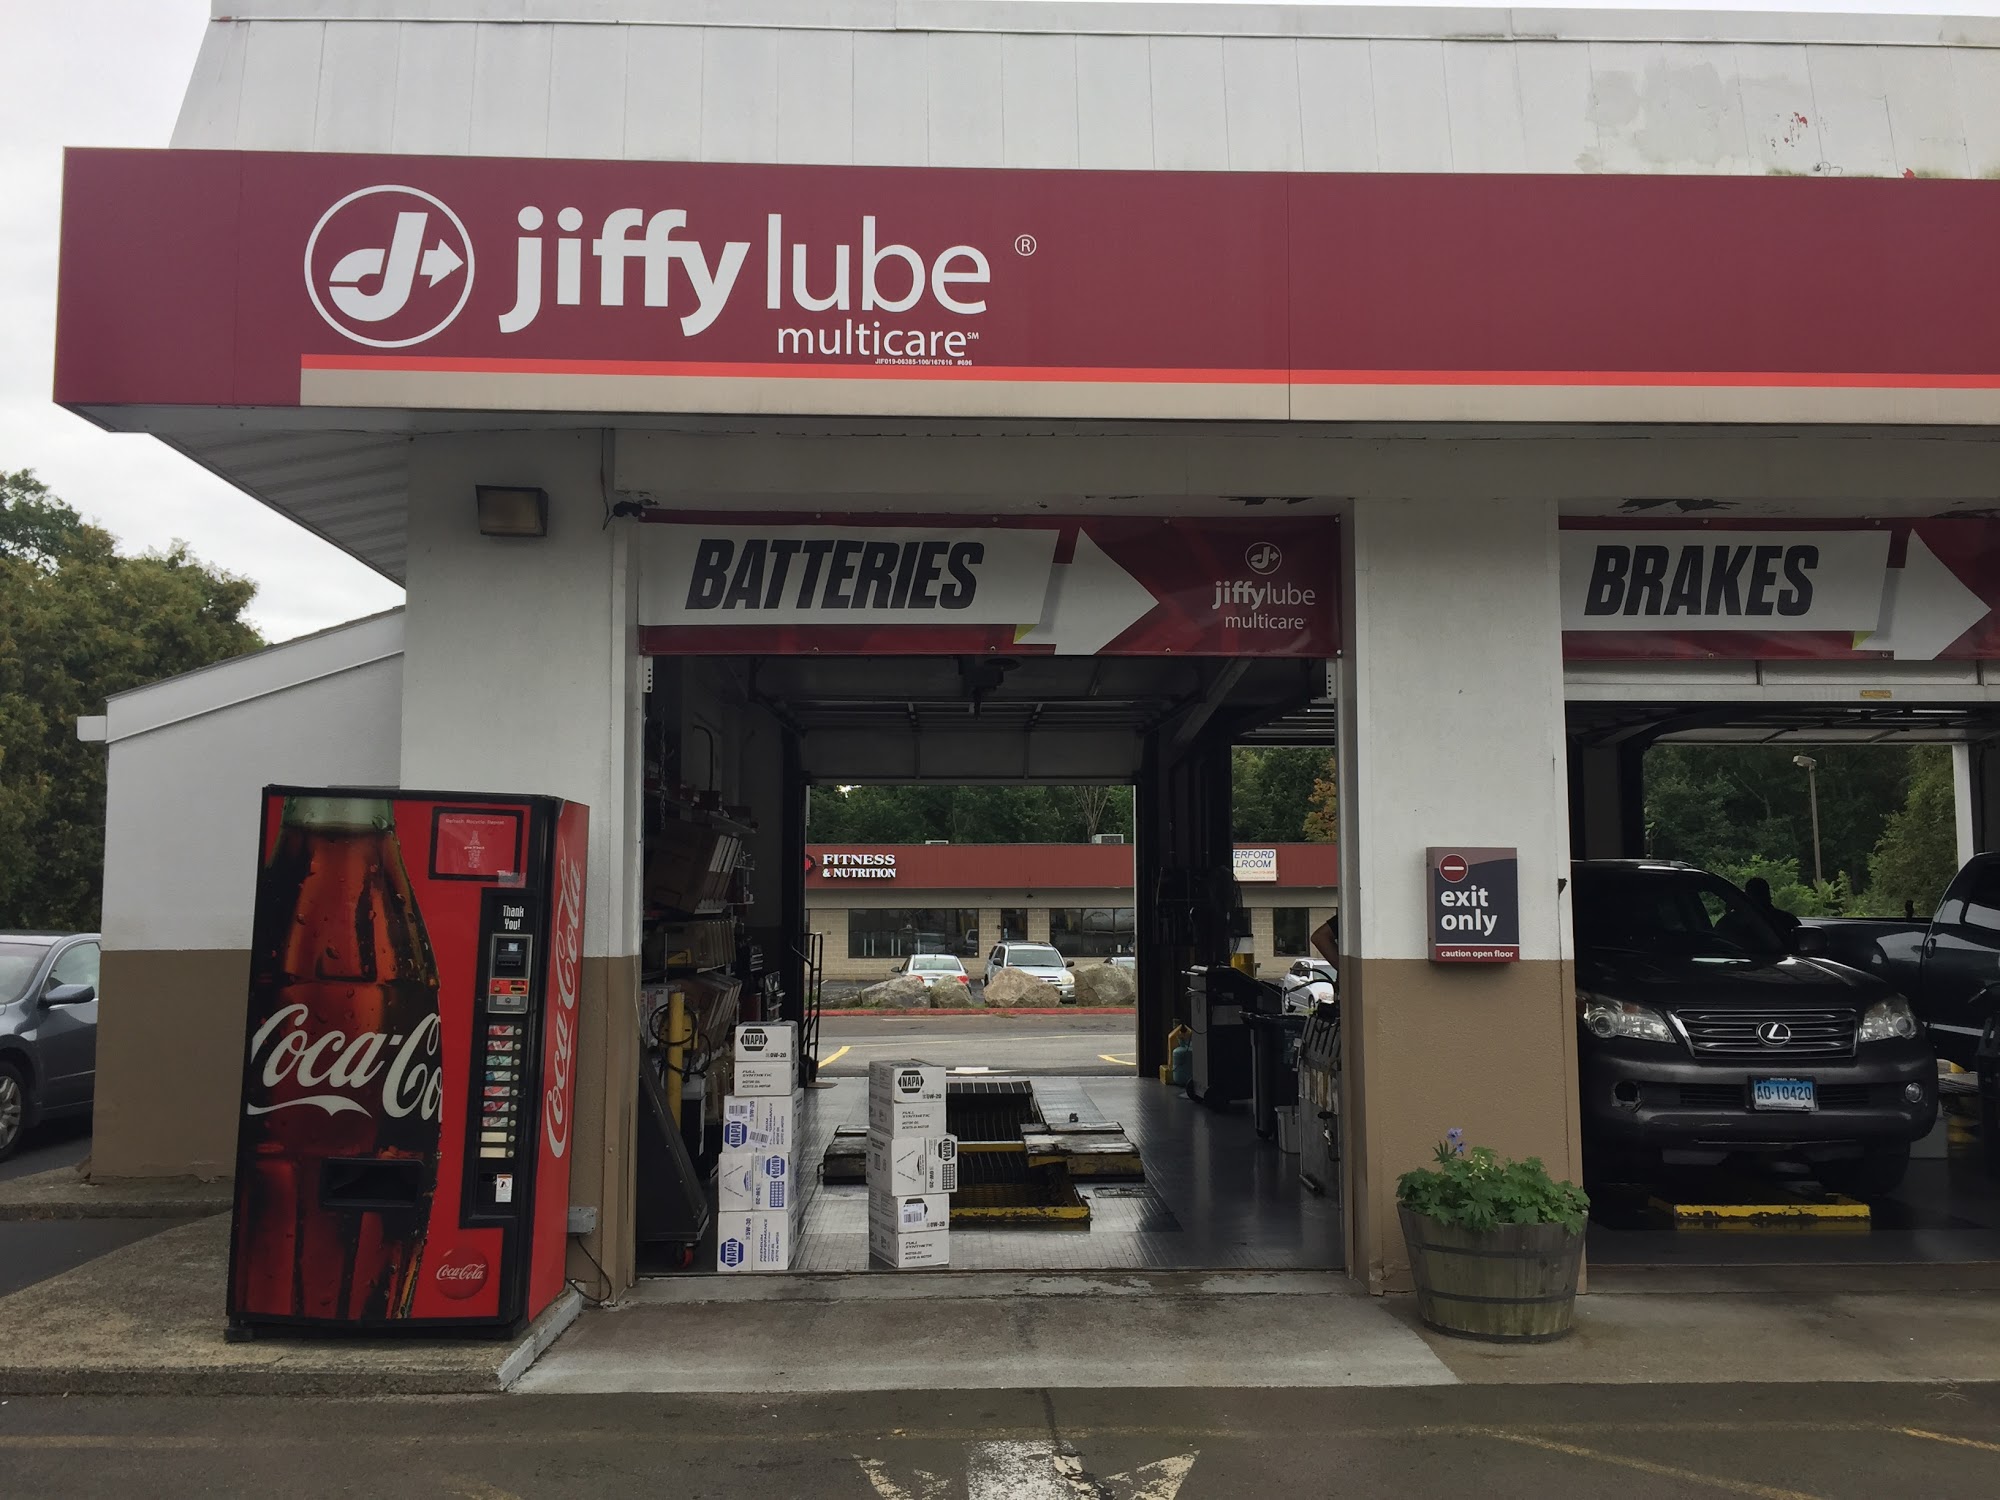 Jiffy Lube Multicare